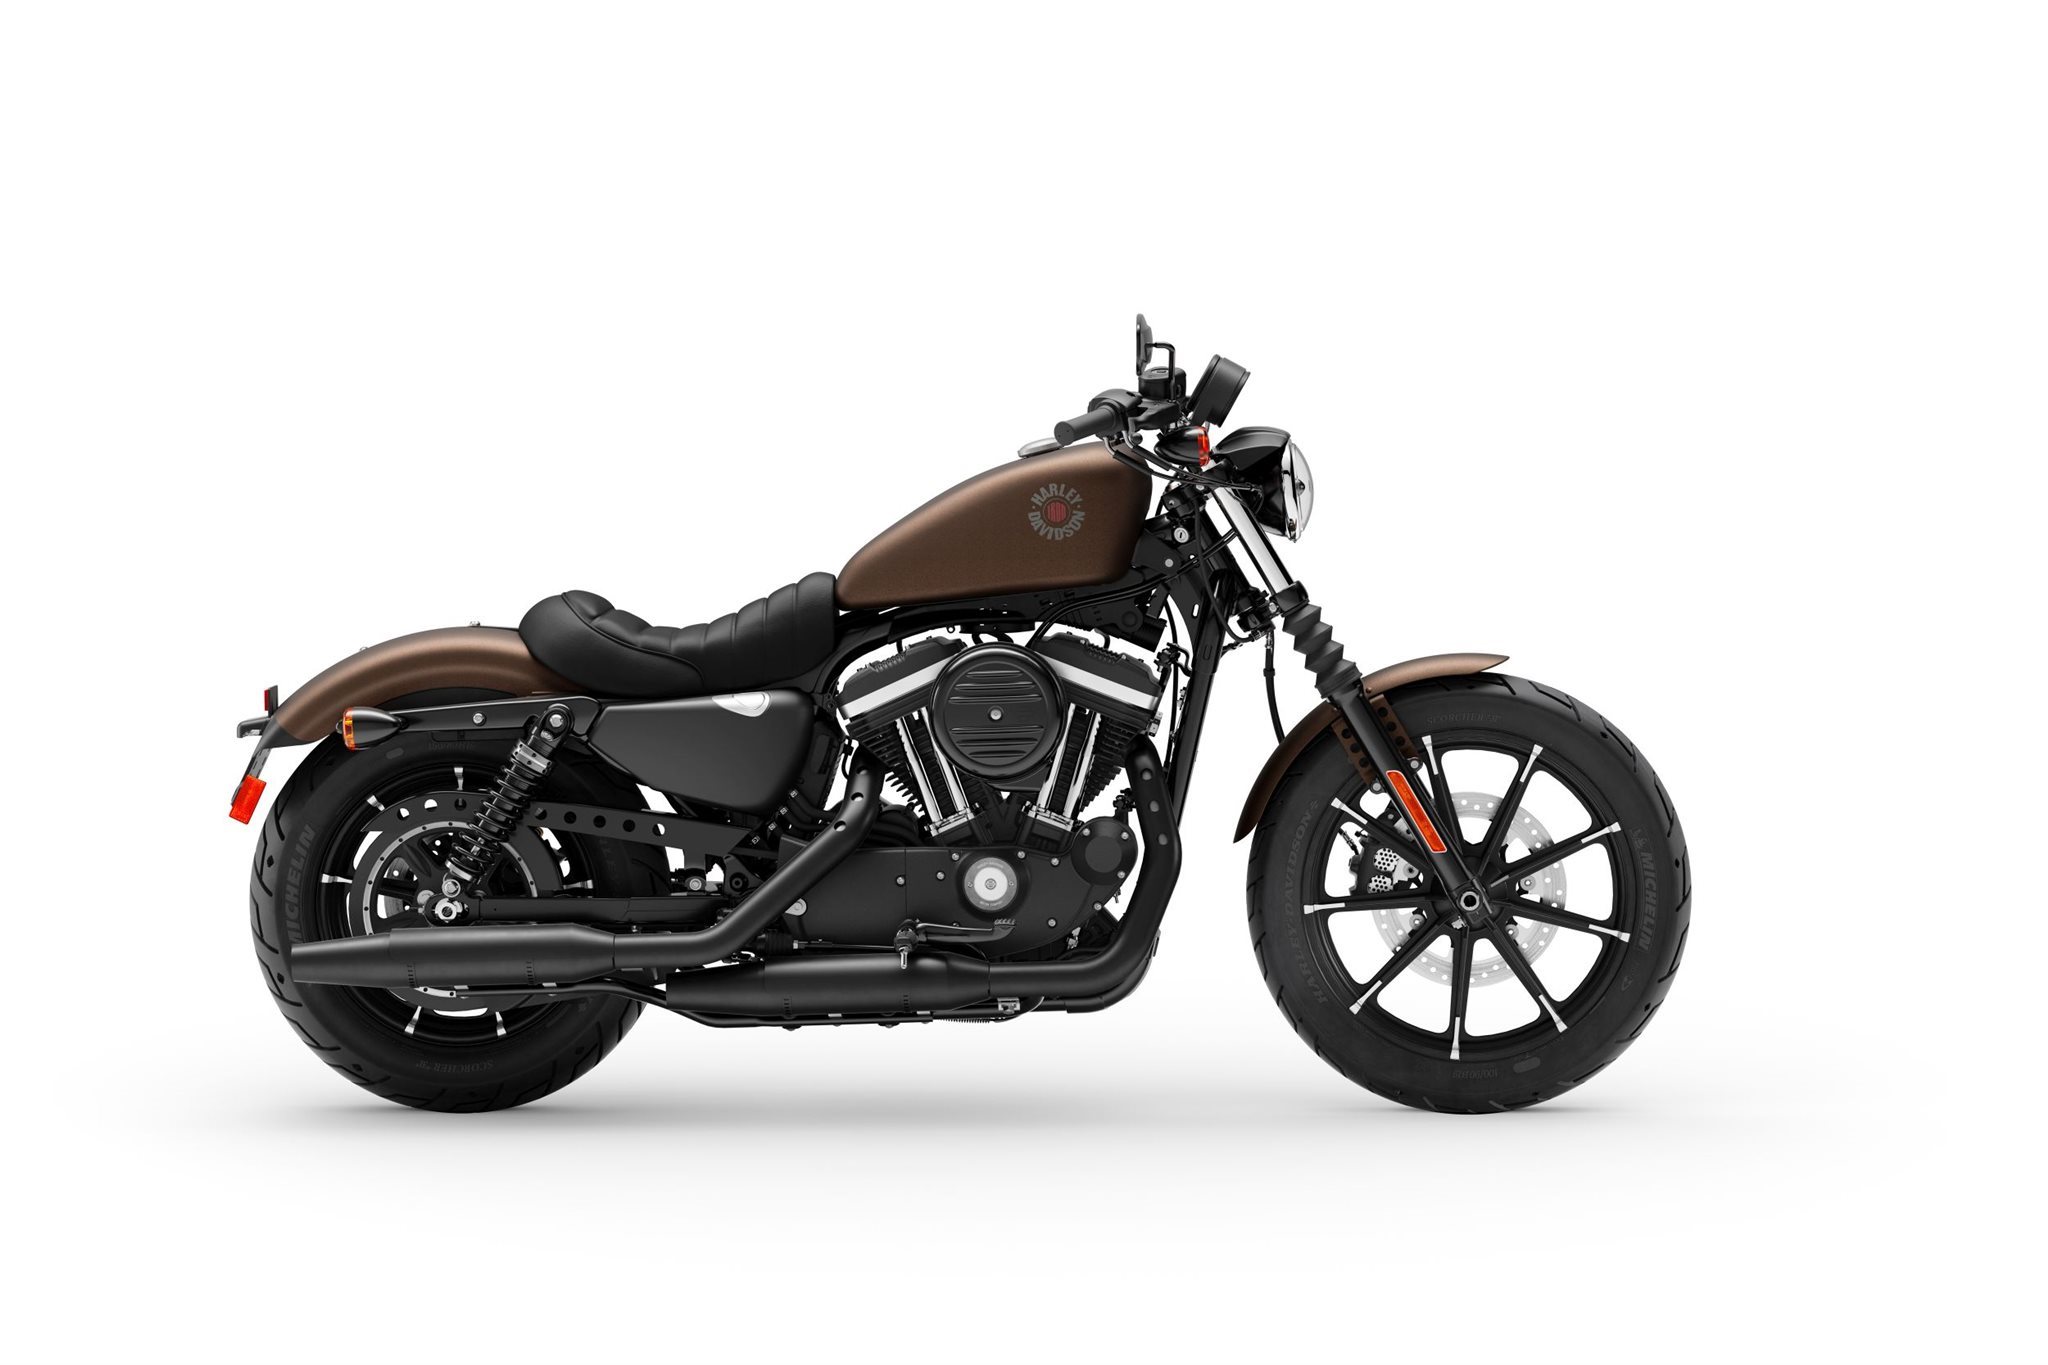 Verleihmotorrad Harley Davidson Sportster Xl 883 N Iron Vom Handler Clocktower Harley Davidson Graz Ab 139 00 Eur Tag 1000ps De